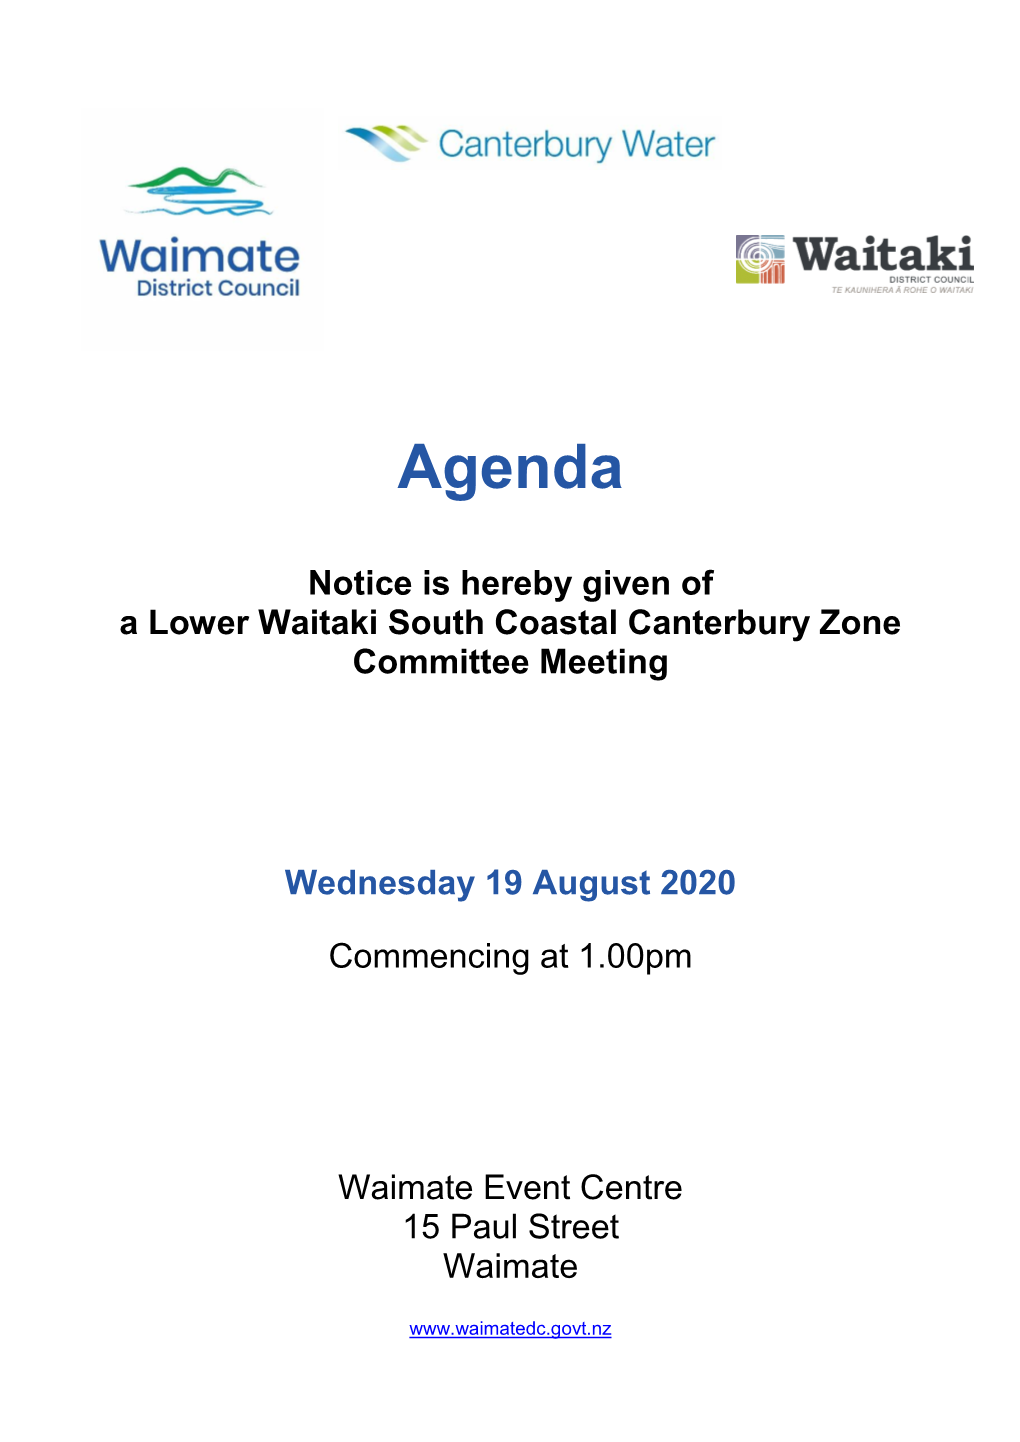 Agenda of Lower Waitaki South Coastal Canterbury Zone